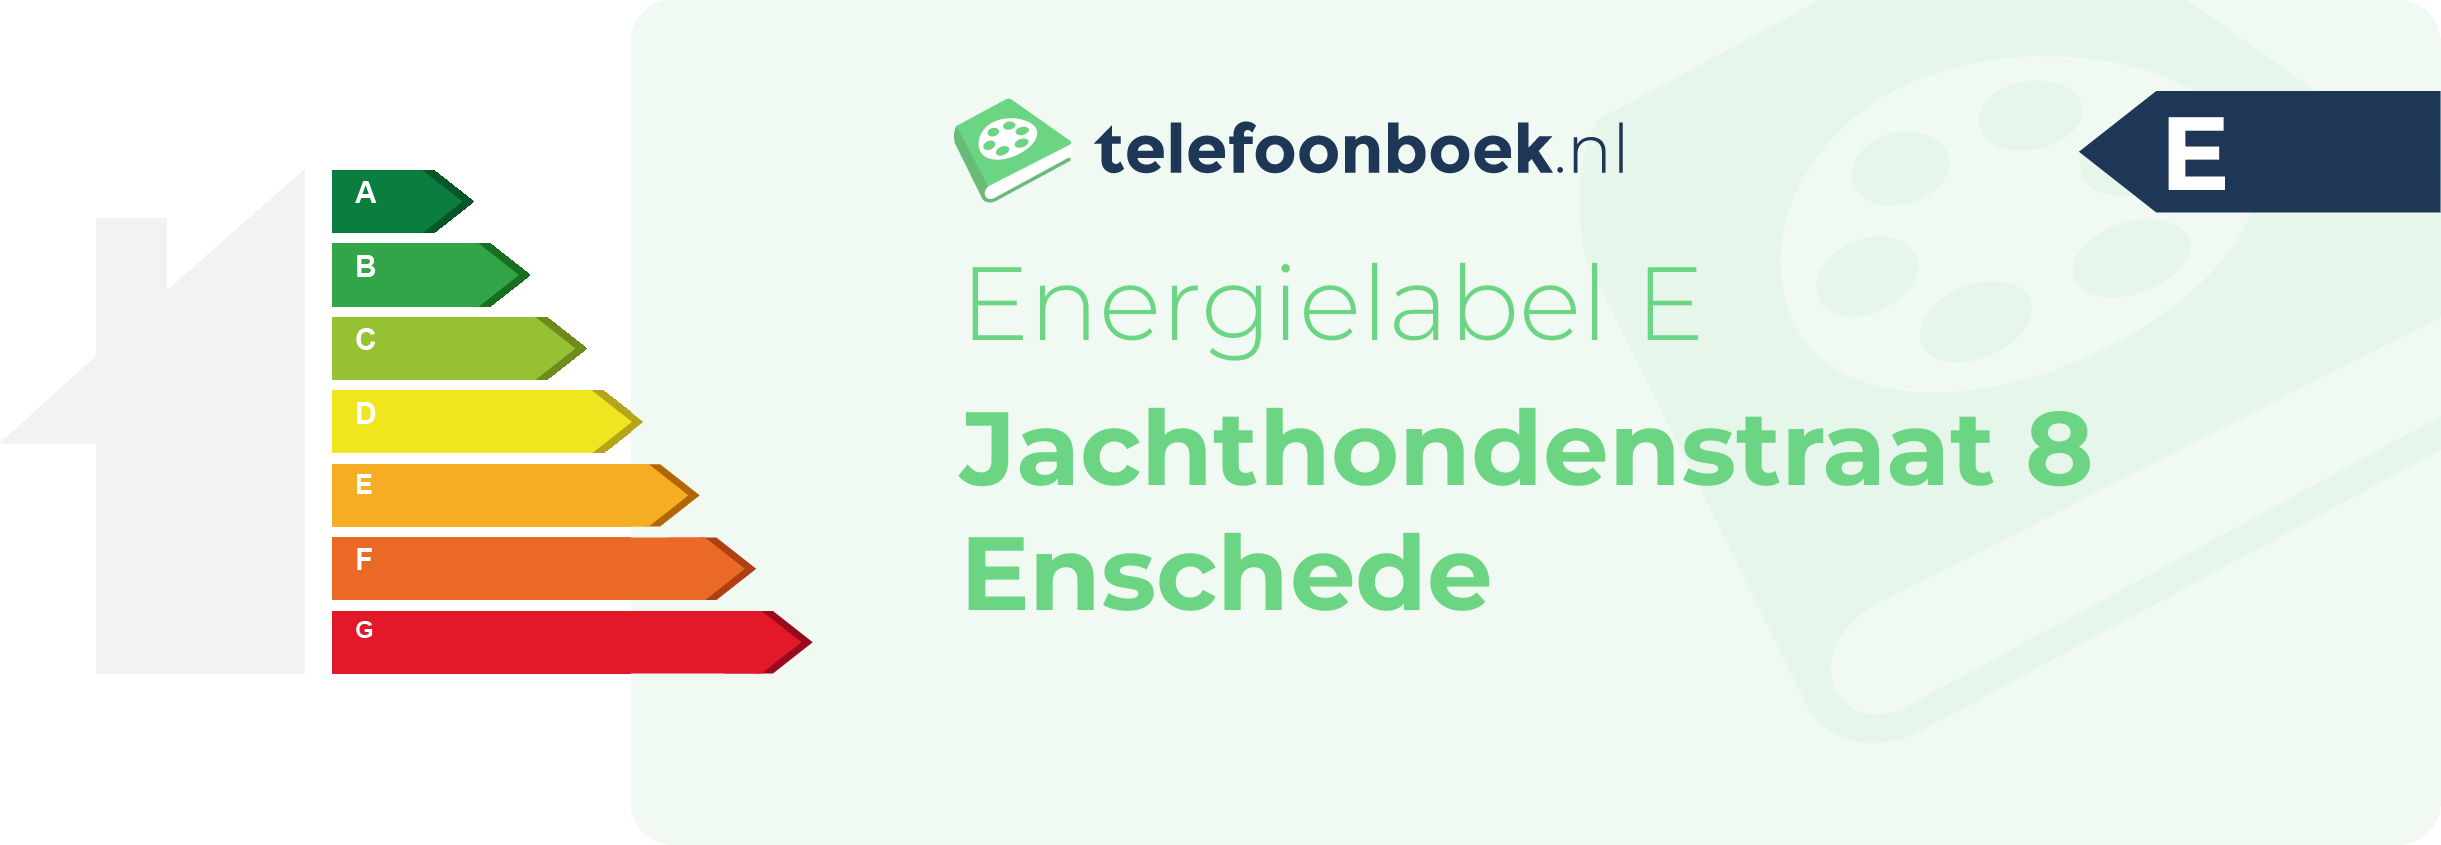 Energielabel Jachthondenstraat 8 Enschede